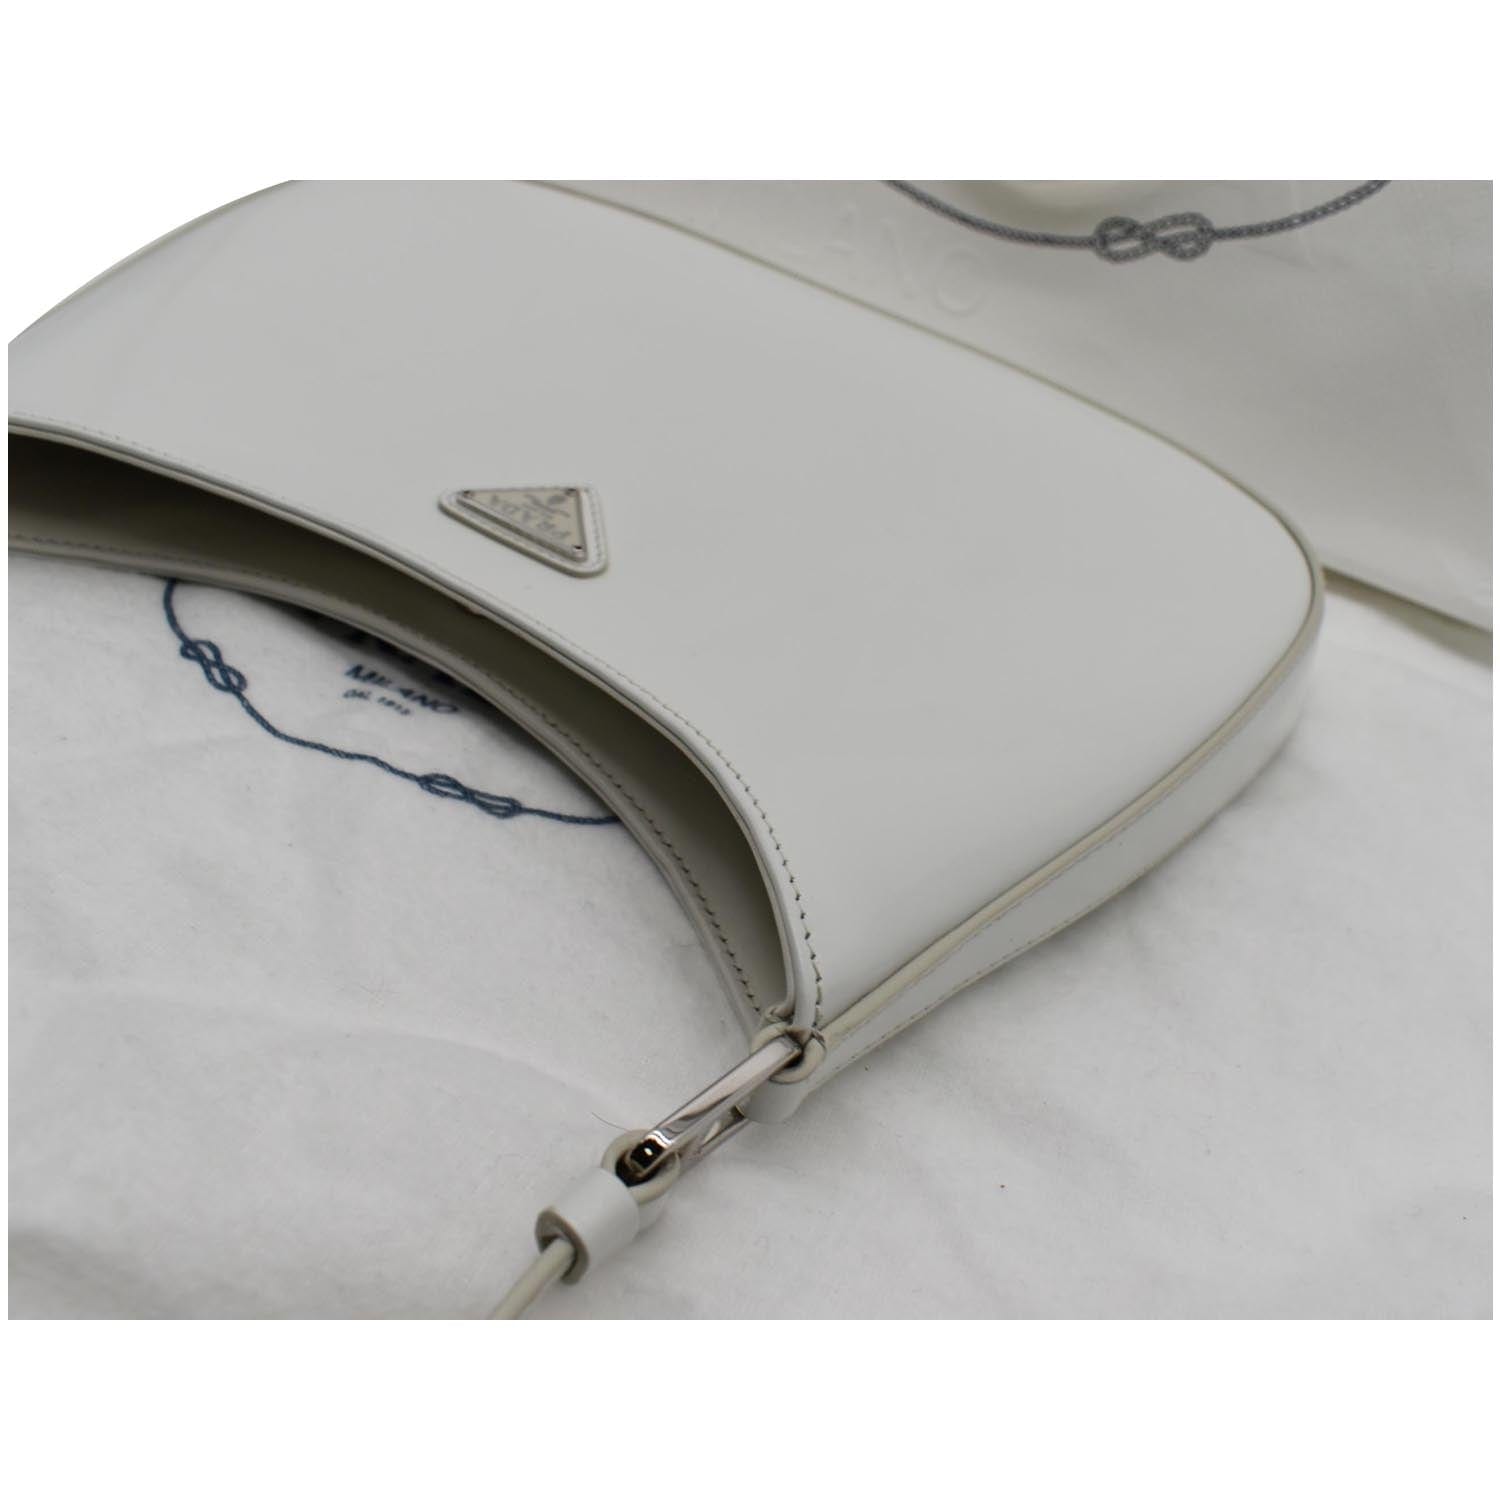 Prada Cleo Brushed Leather Shoulder Bag In White